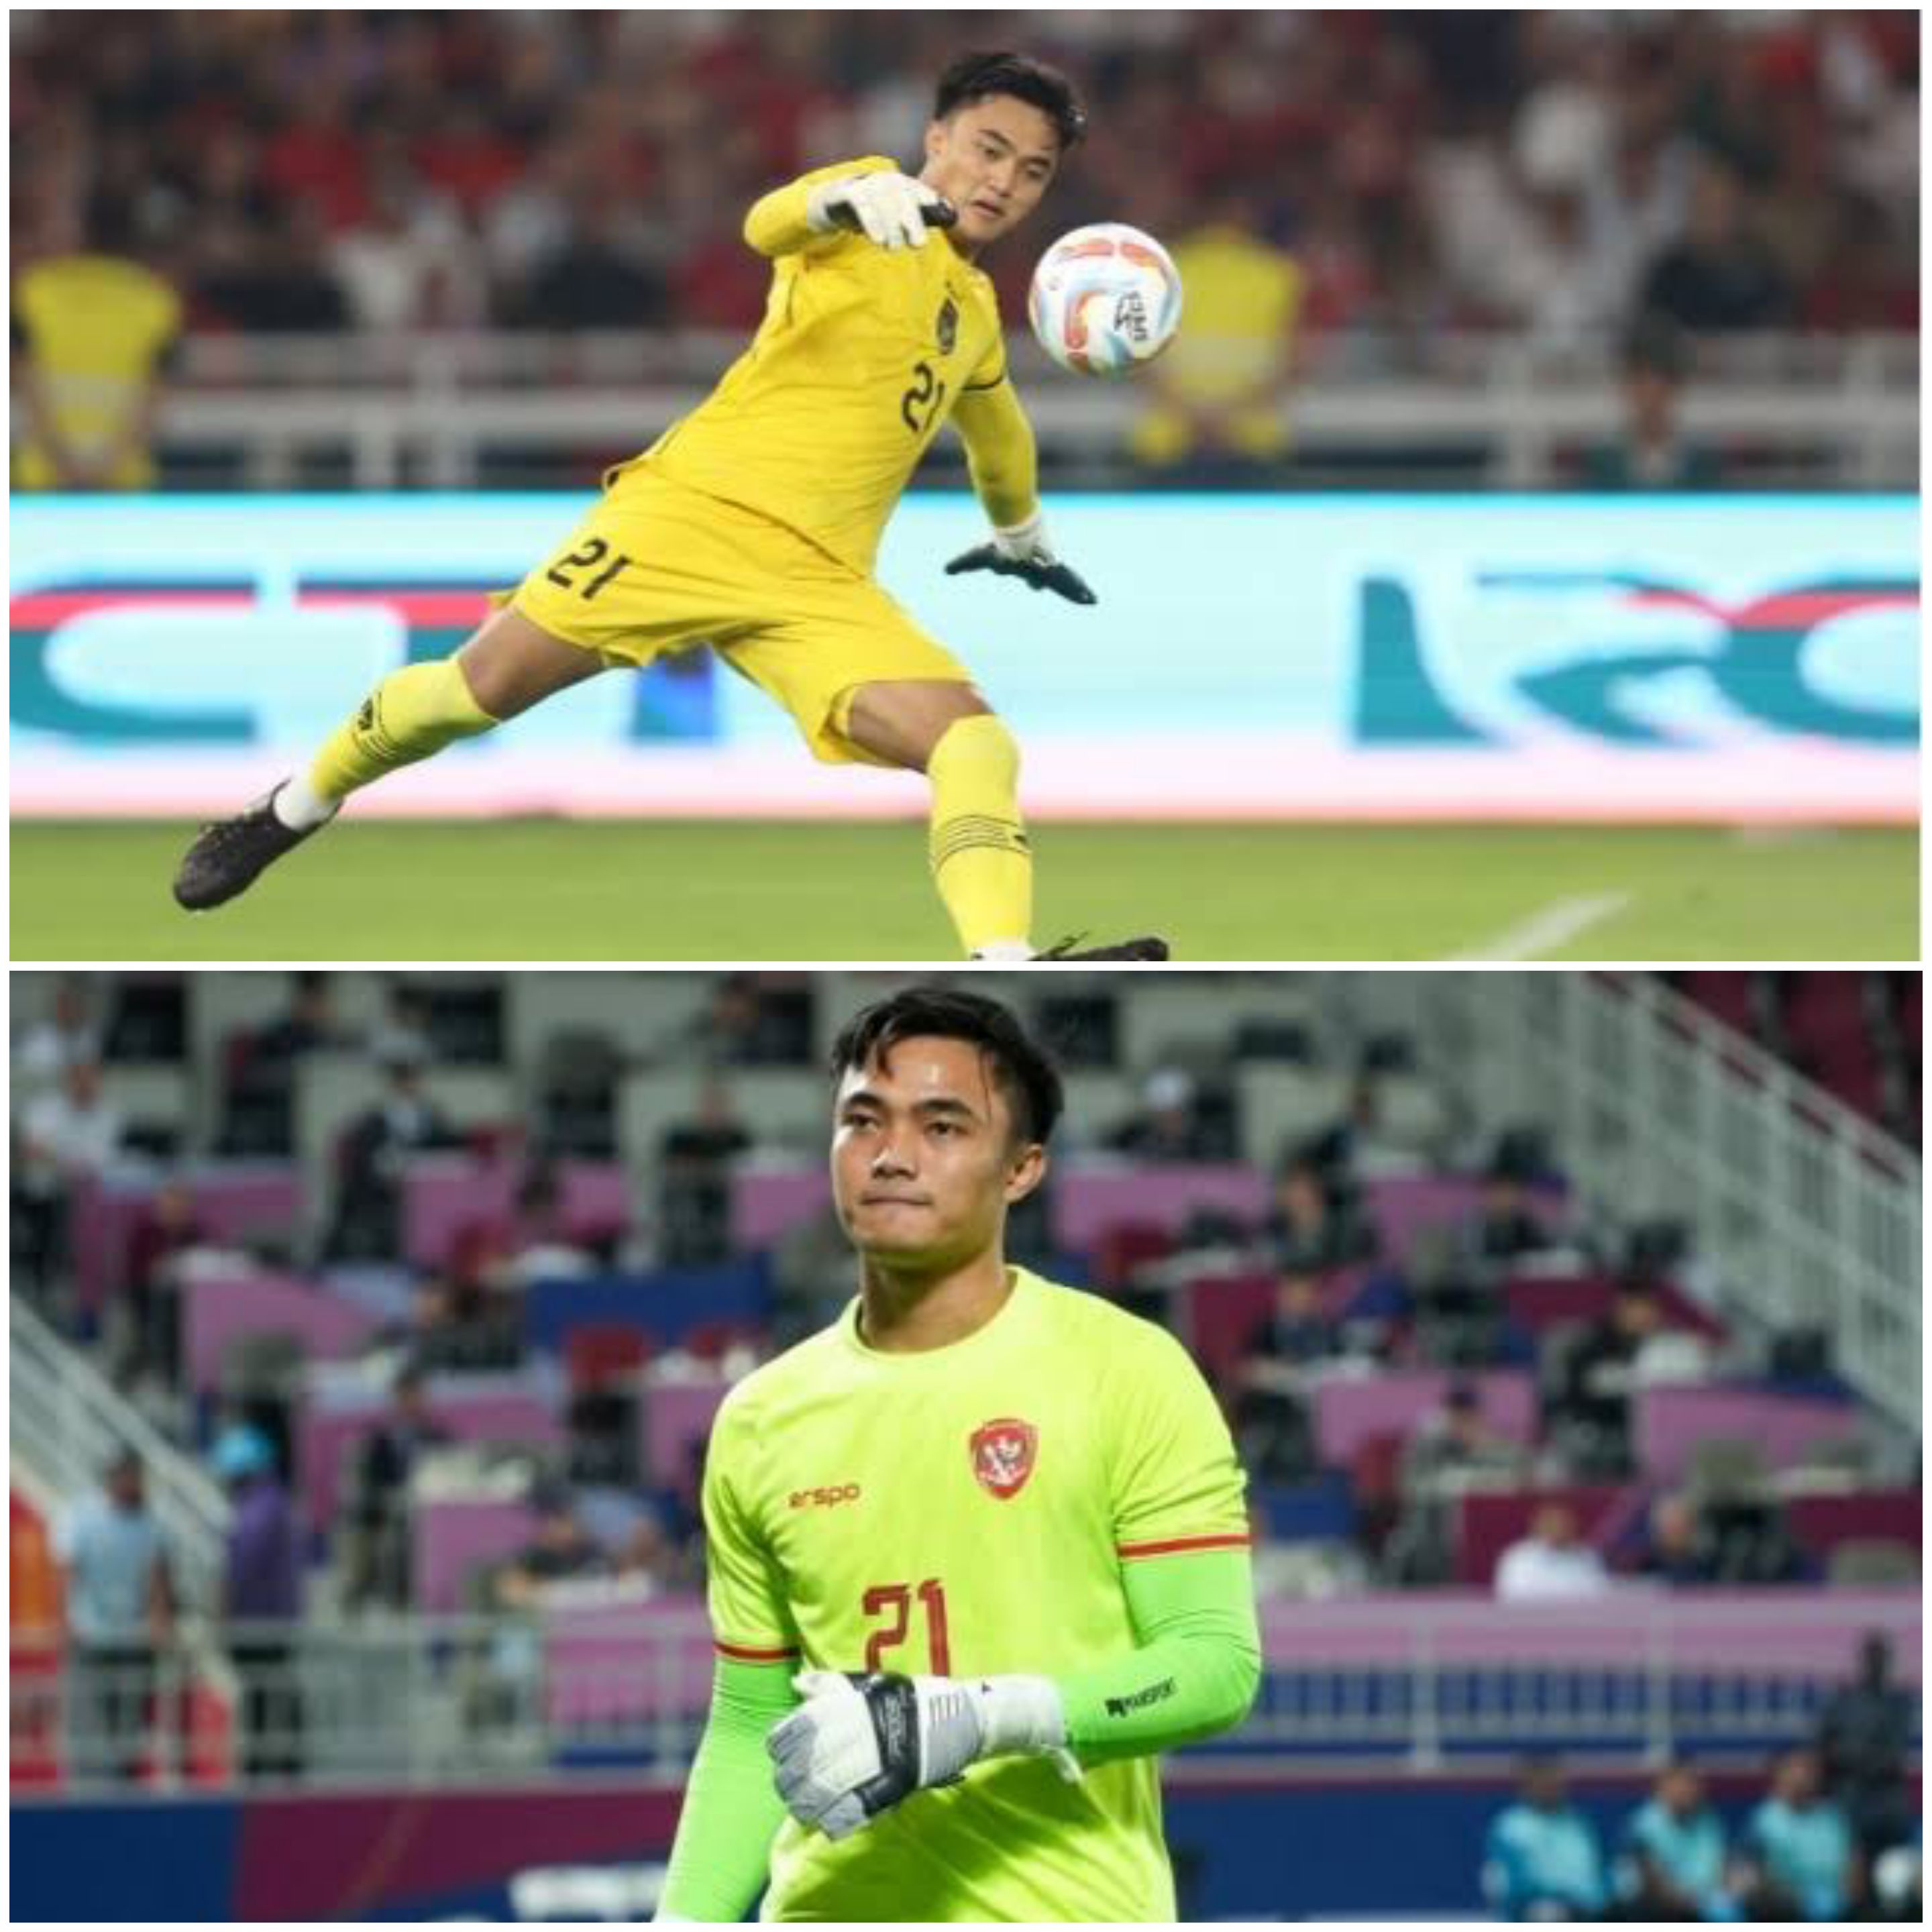 Kiper Timnas Indonesia U-23, Pahlawan atau Provokator? Begini Sorotan Media Korea Selatan!